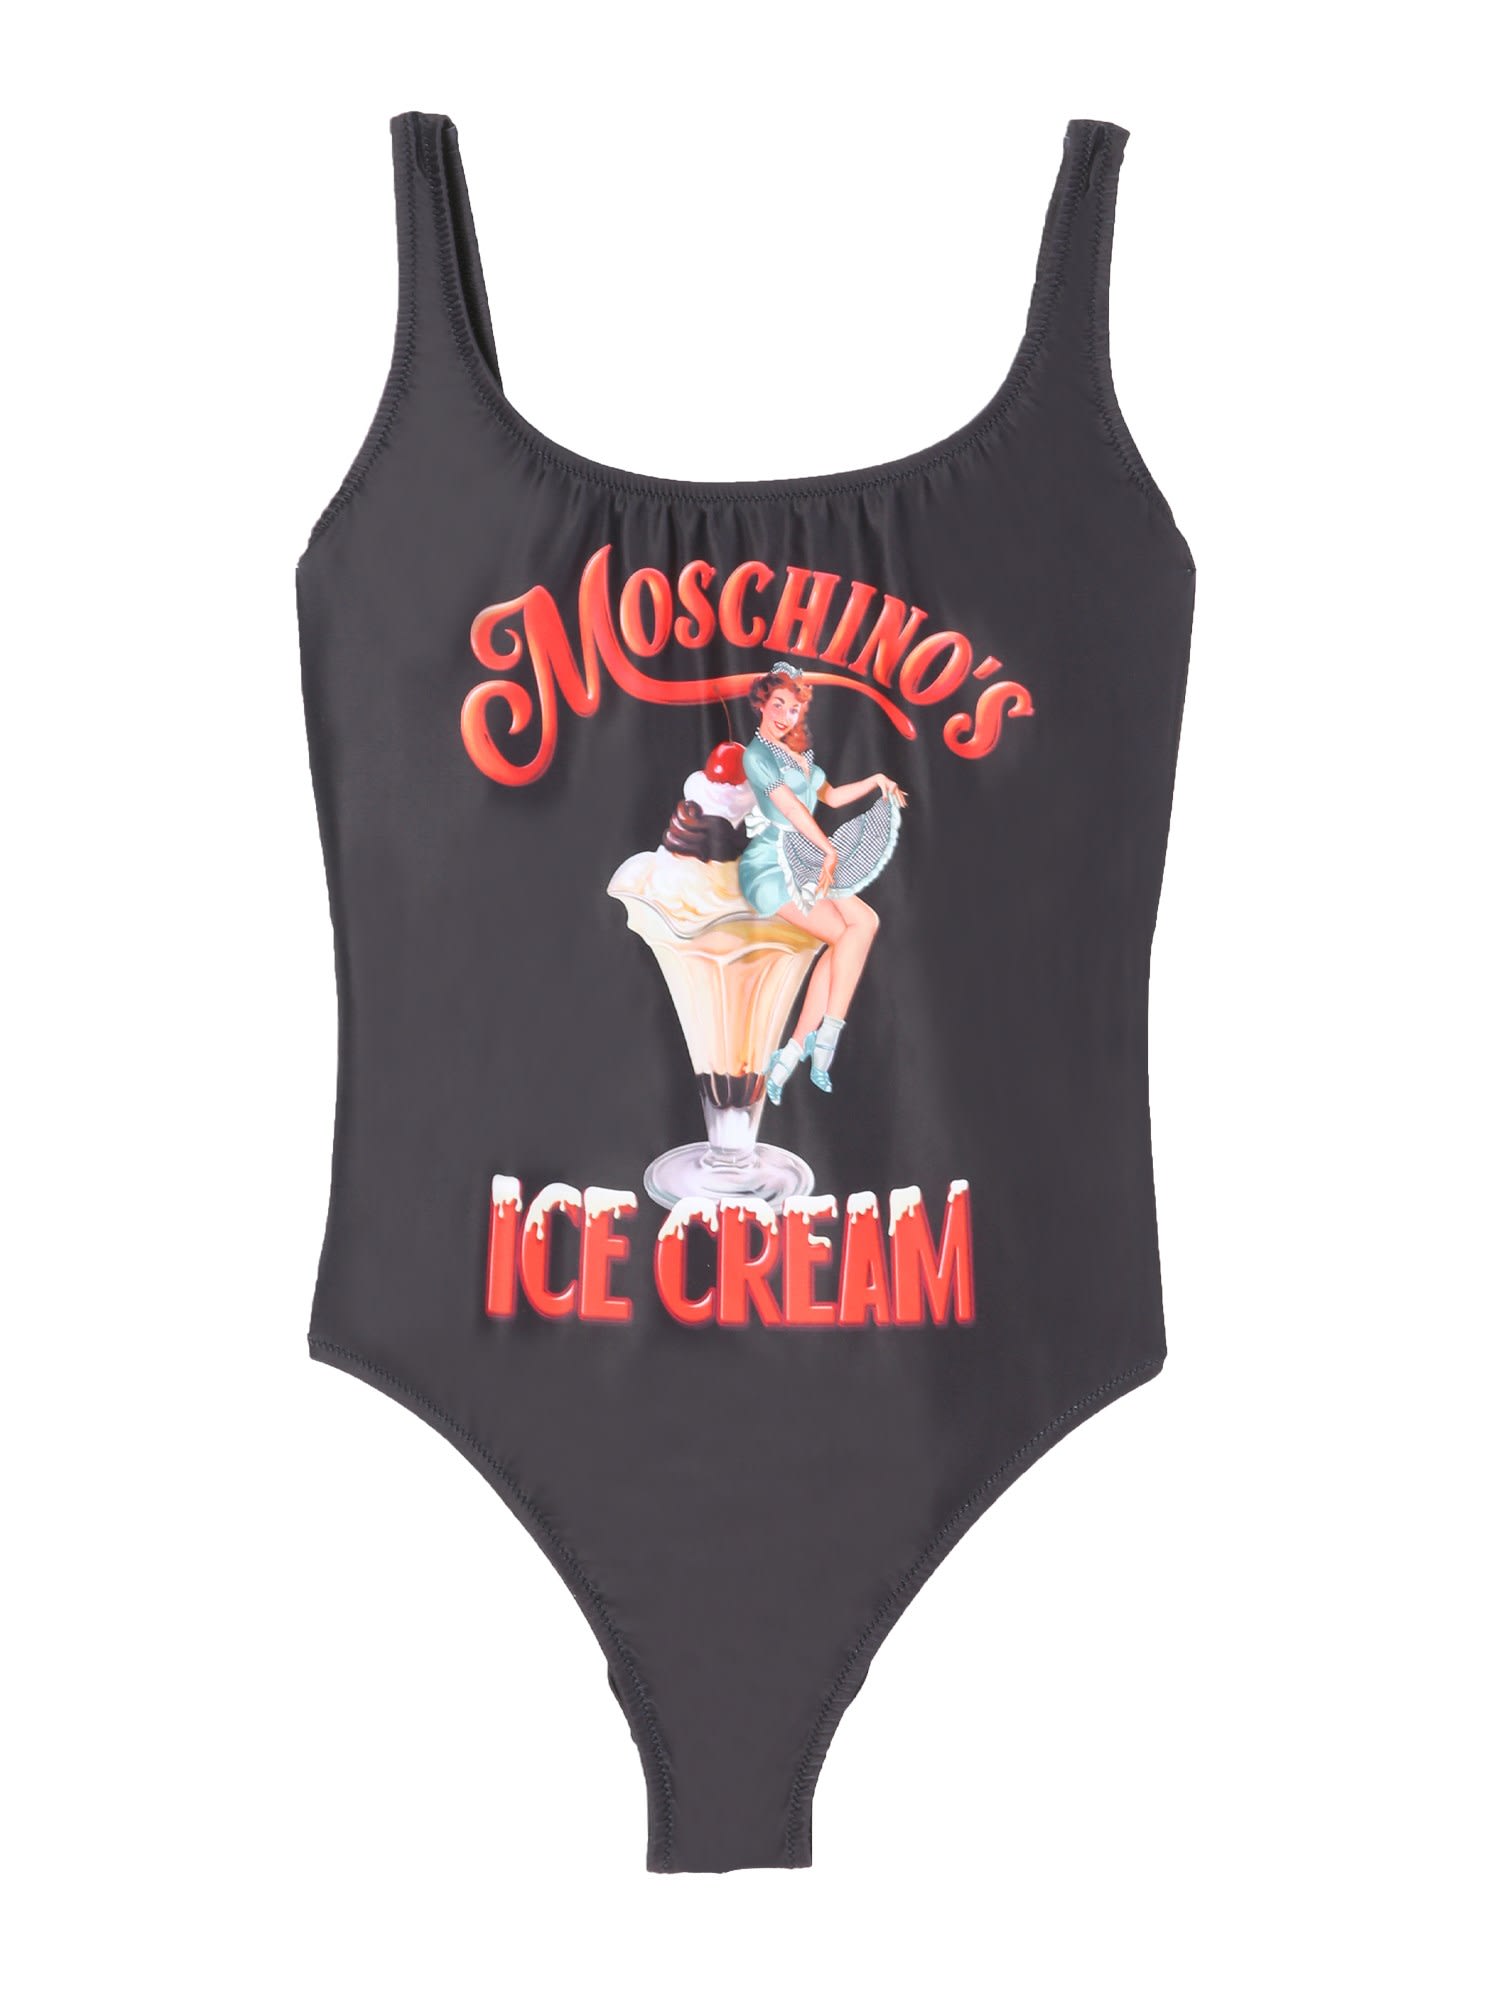 Moschino Ice Cream One Piece Swimsuit